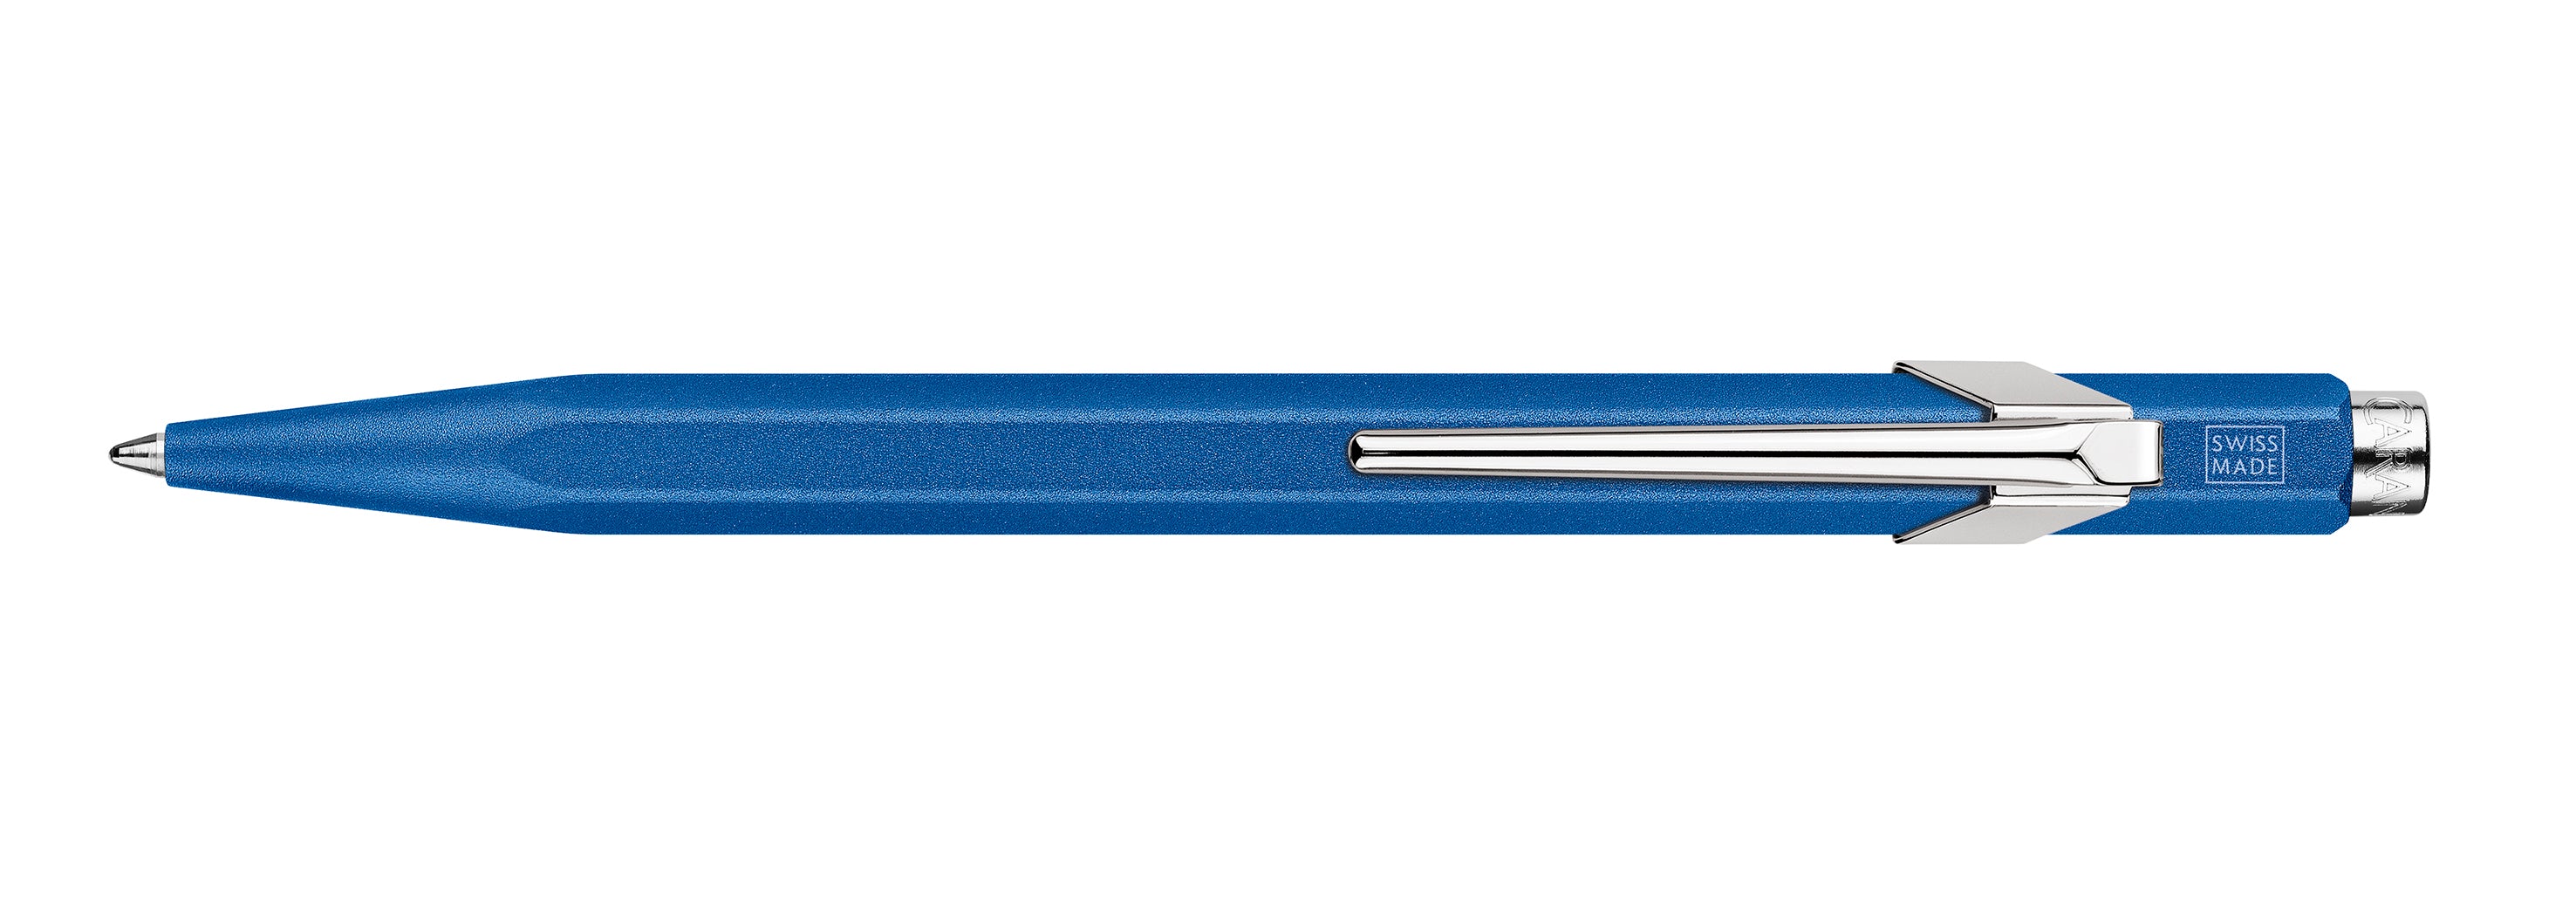 Caran d'Ache COLORMAT-X 849 Metal Ballpoint Pen